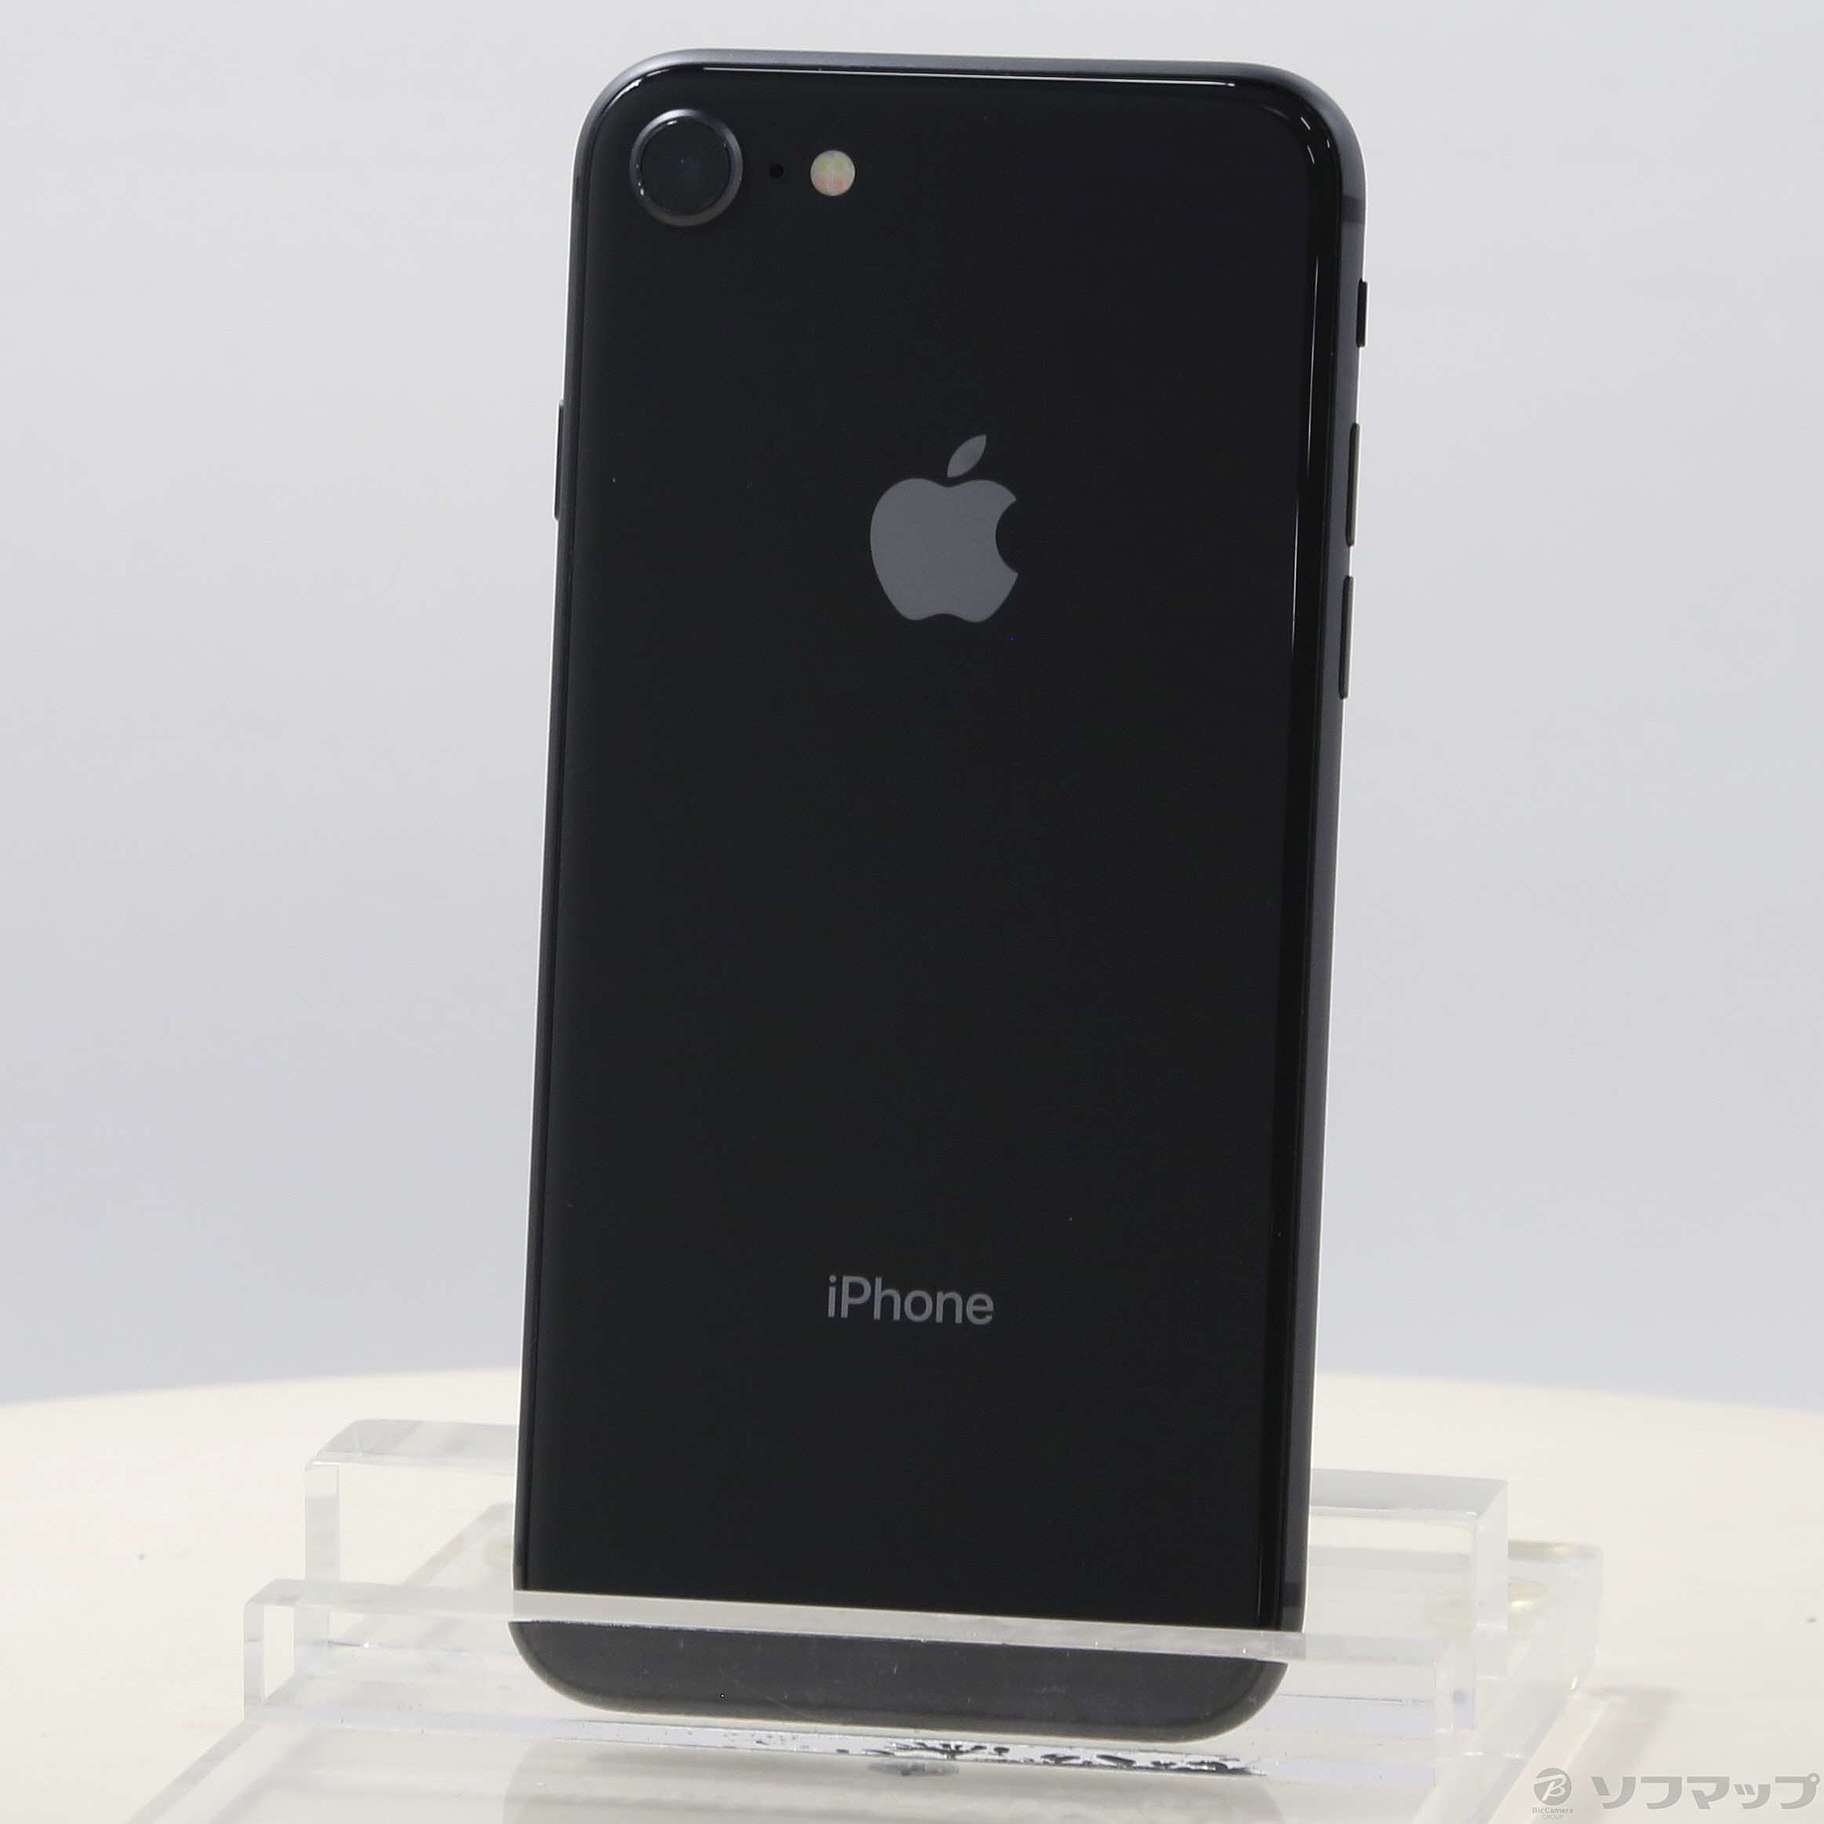 iPhone 8 Space Gray 256GB Softbank (100)